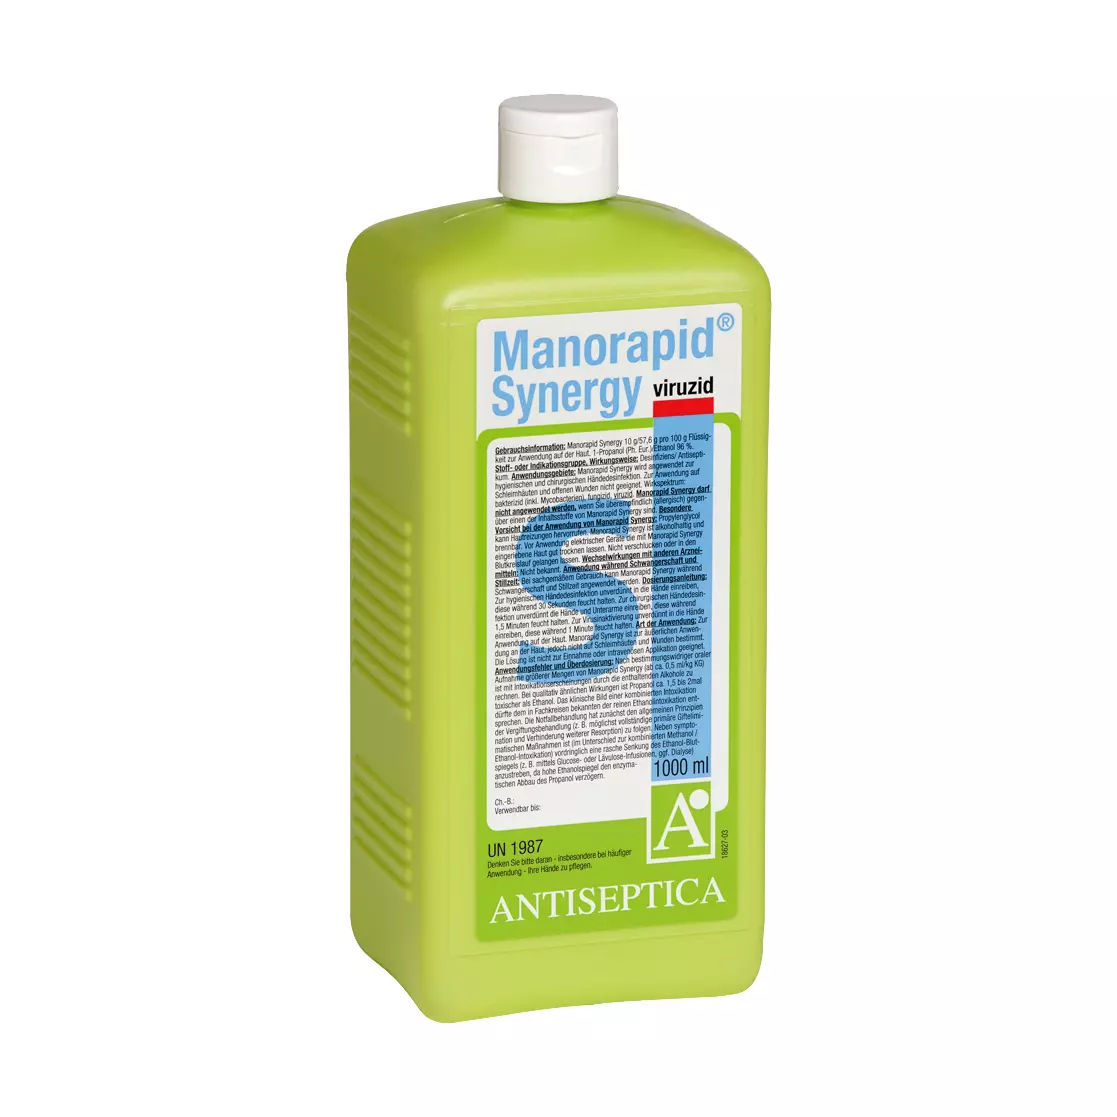 Manorapid® Synergy hand sanitiser